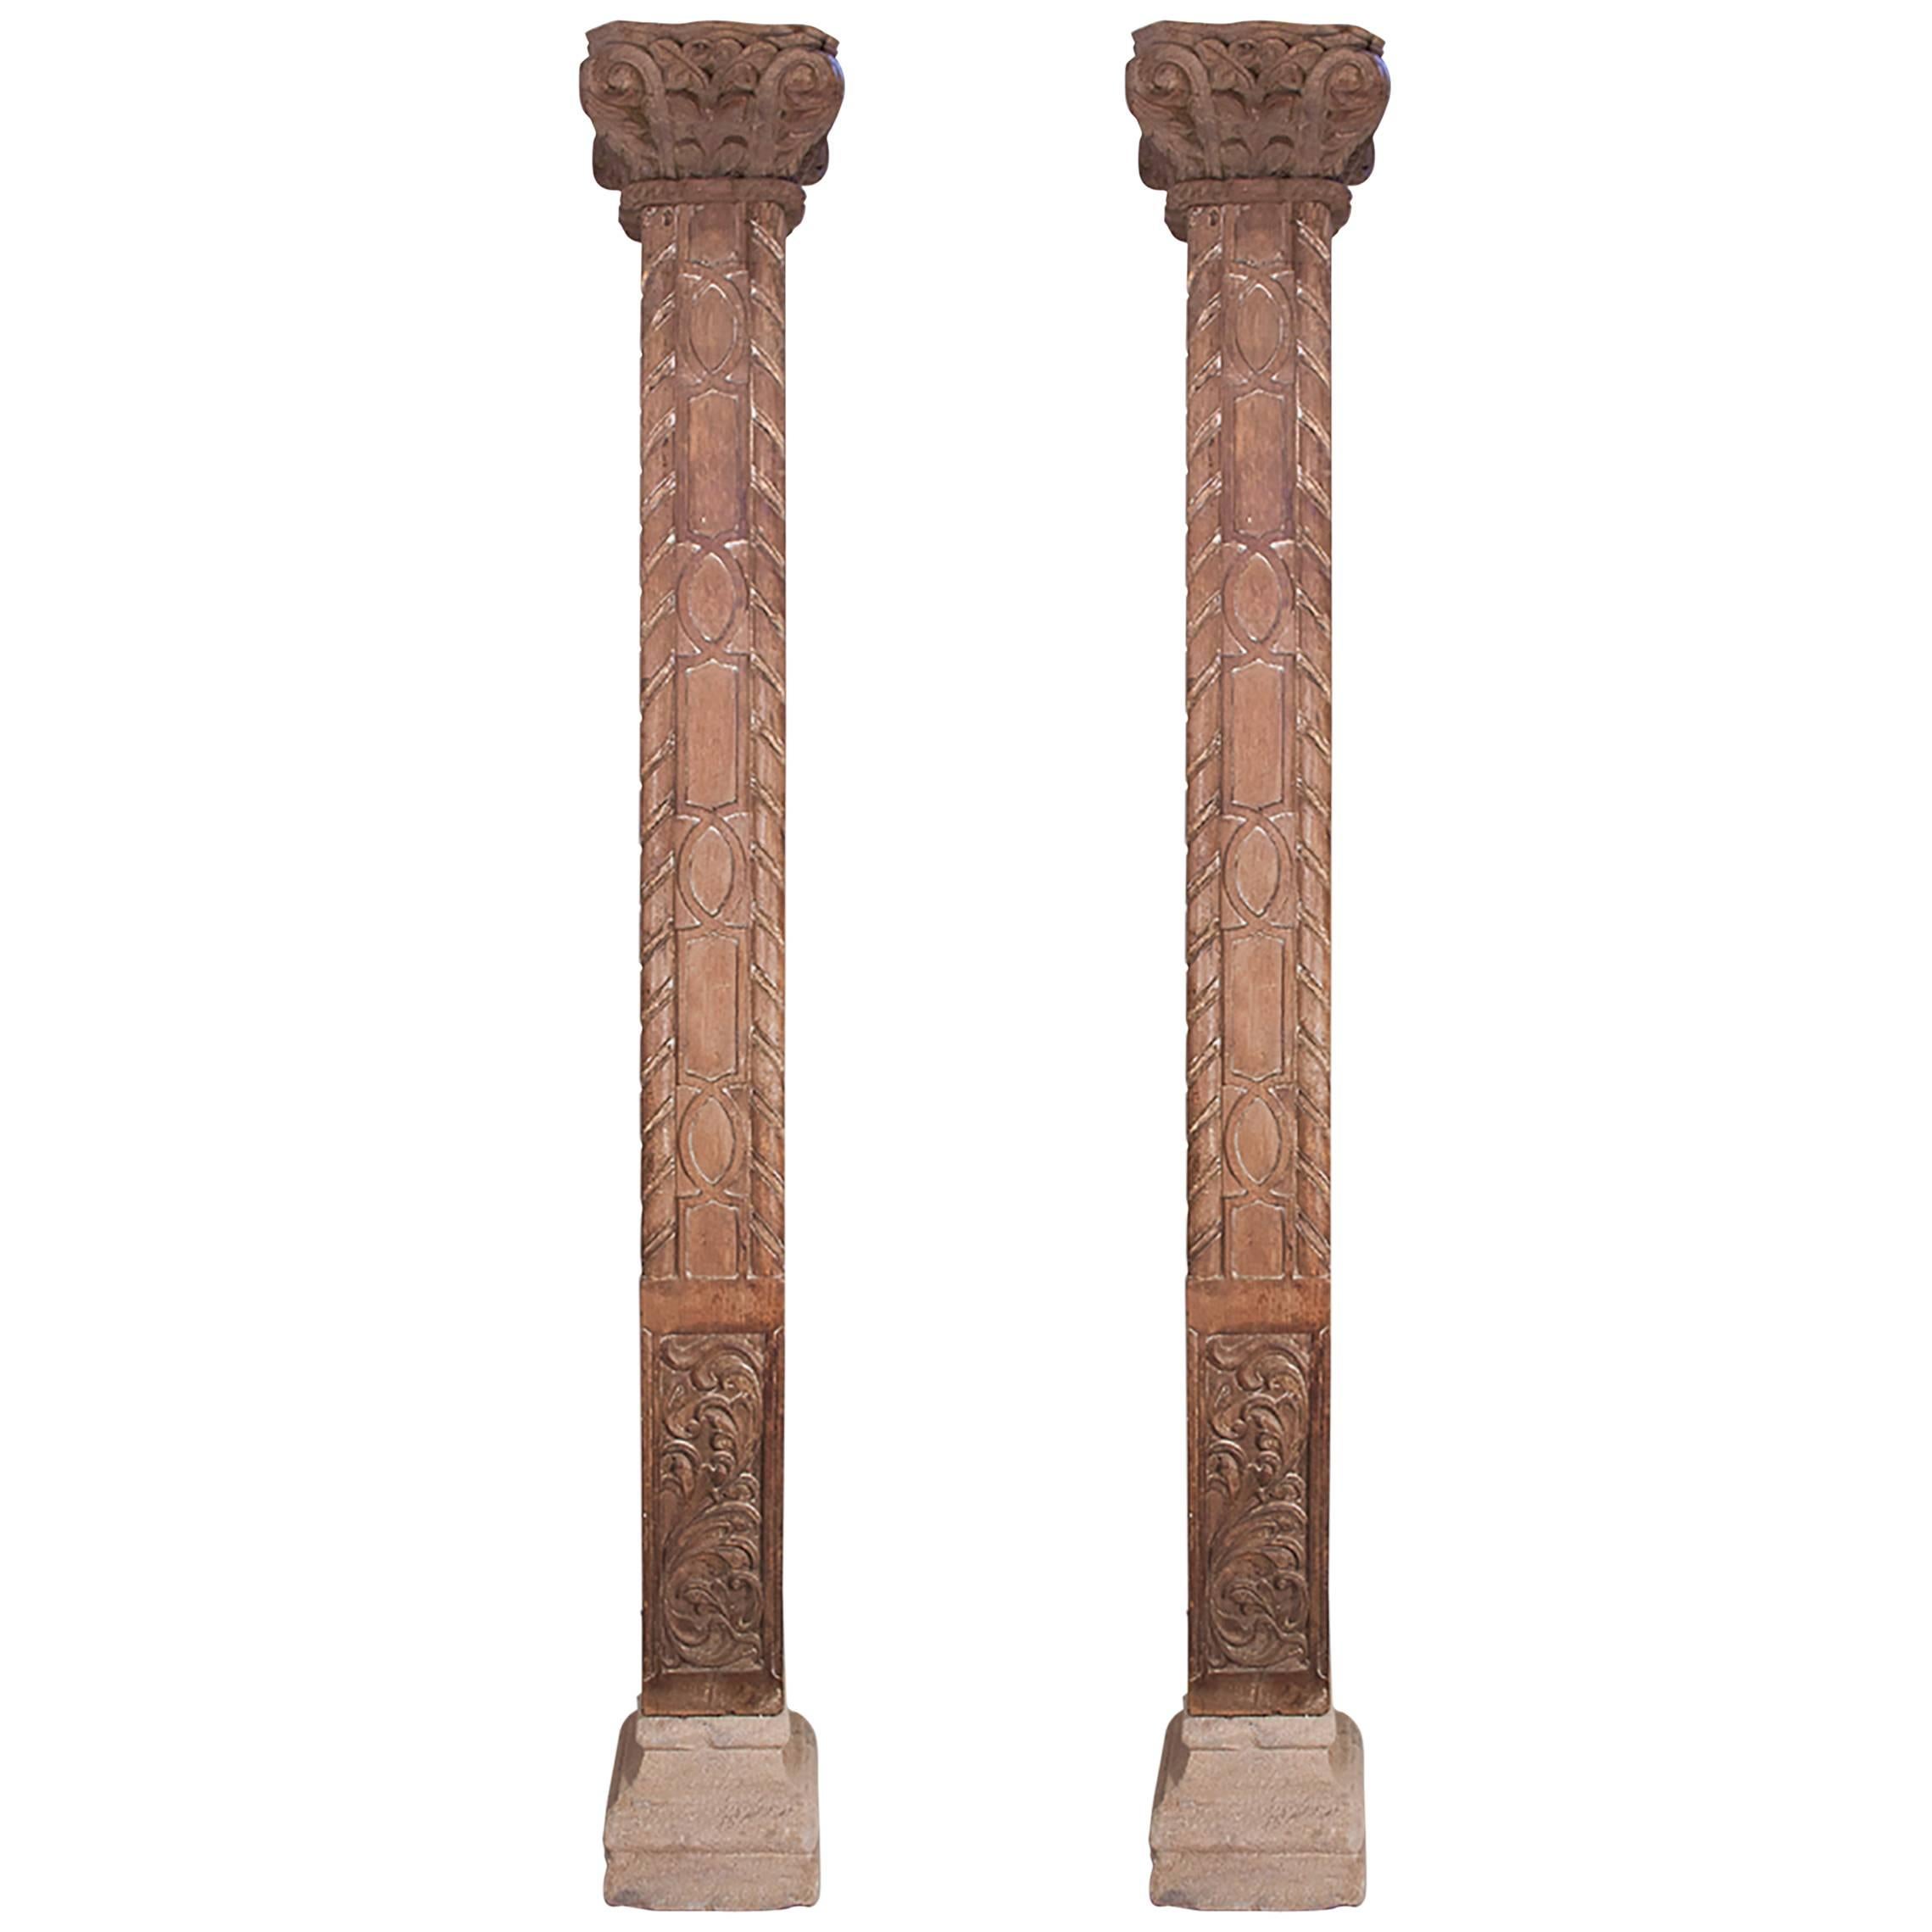 Pair of 19th Century Carved Teak Wood Columns or Pillars